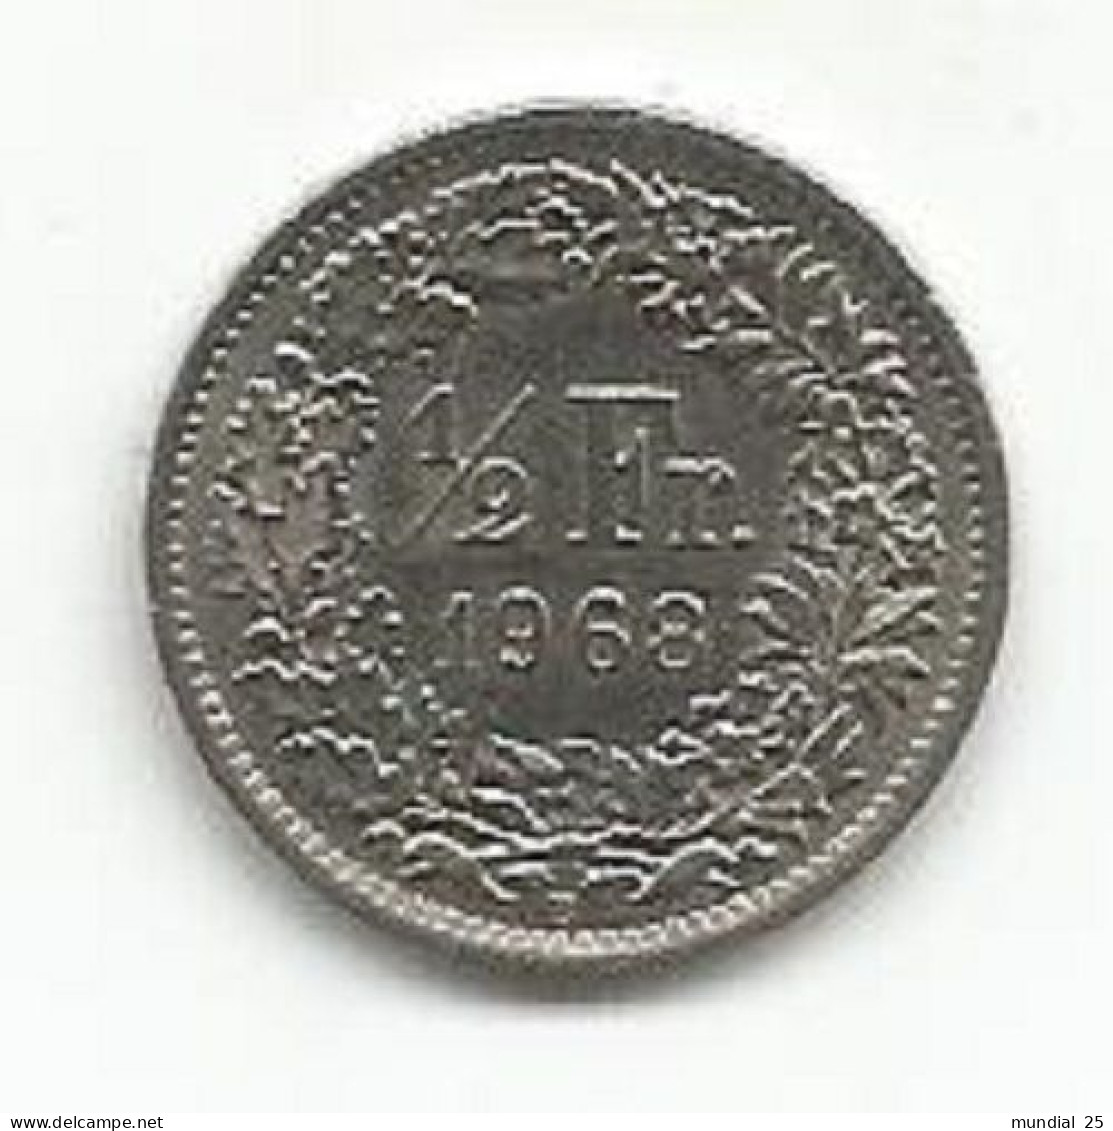 SWITZERLAND 1/2 FRANC 1968 B - 1/2 Franc